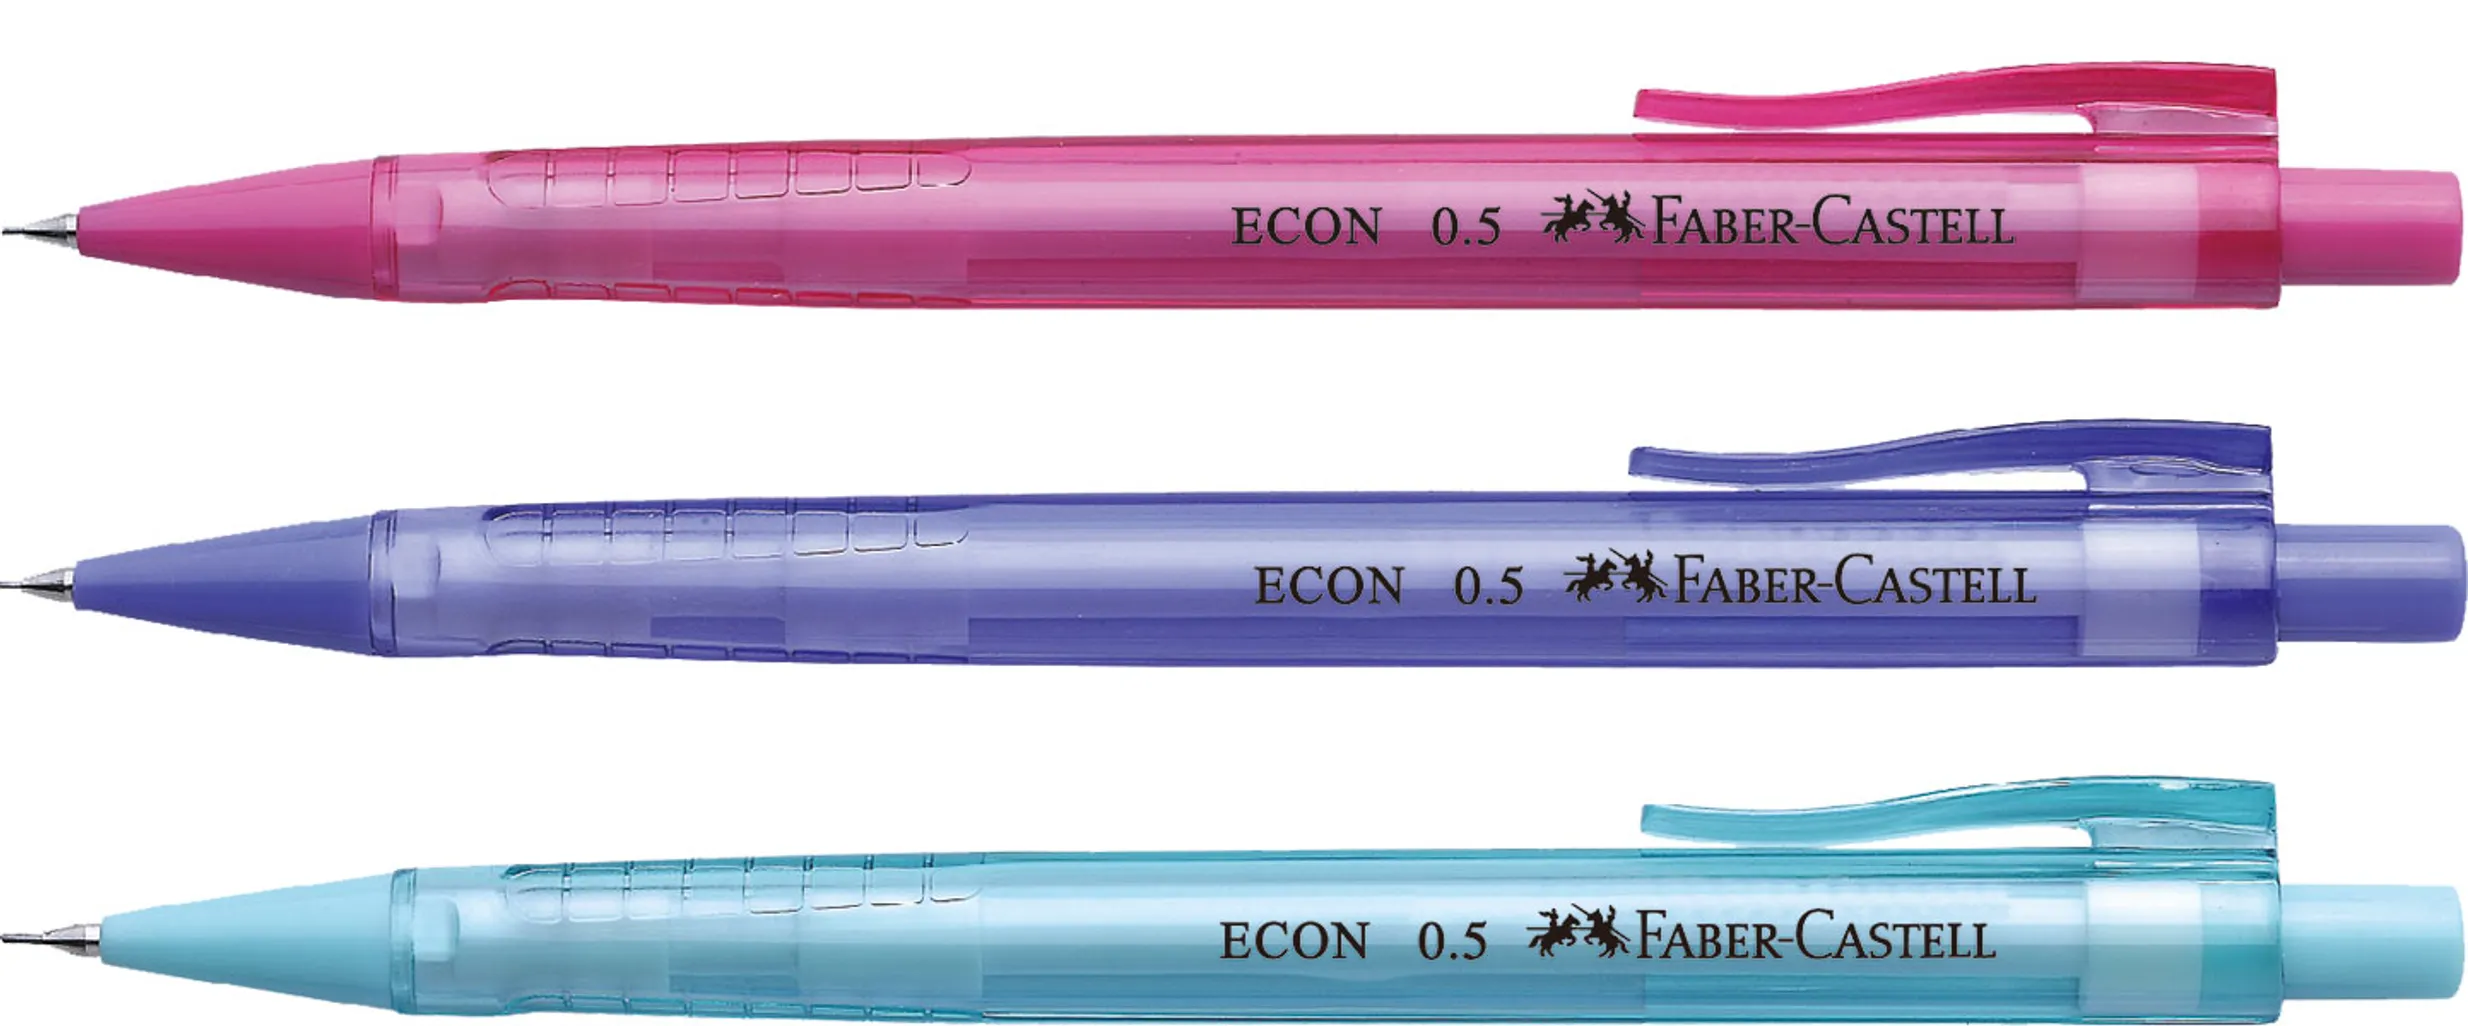 econ mechanical pencil